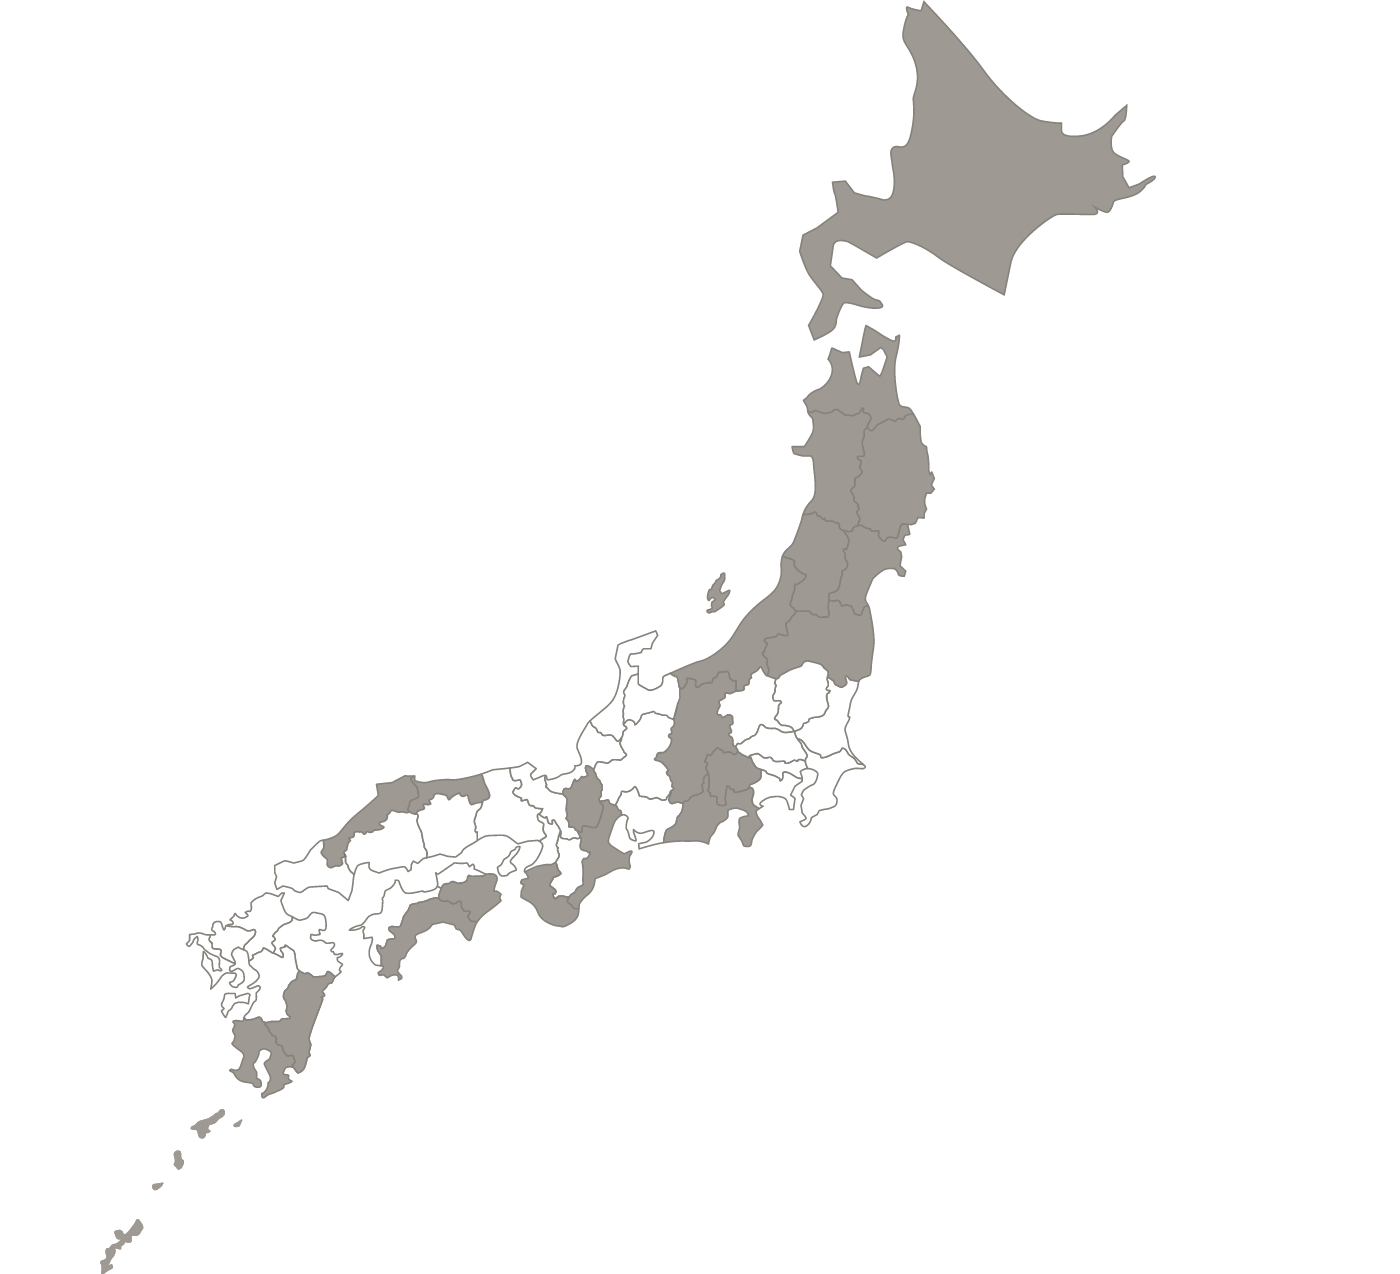 Distribution 集配エリア 中四国 関東 東海 関西 九州